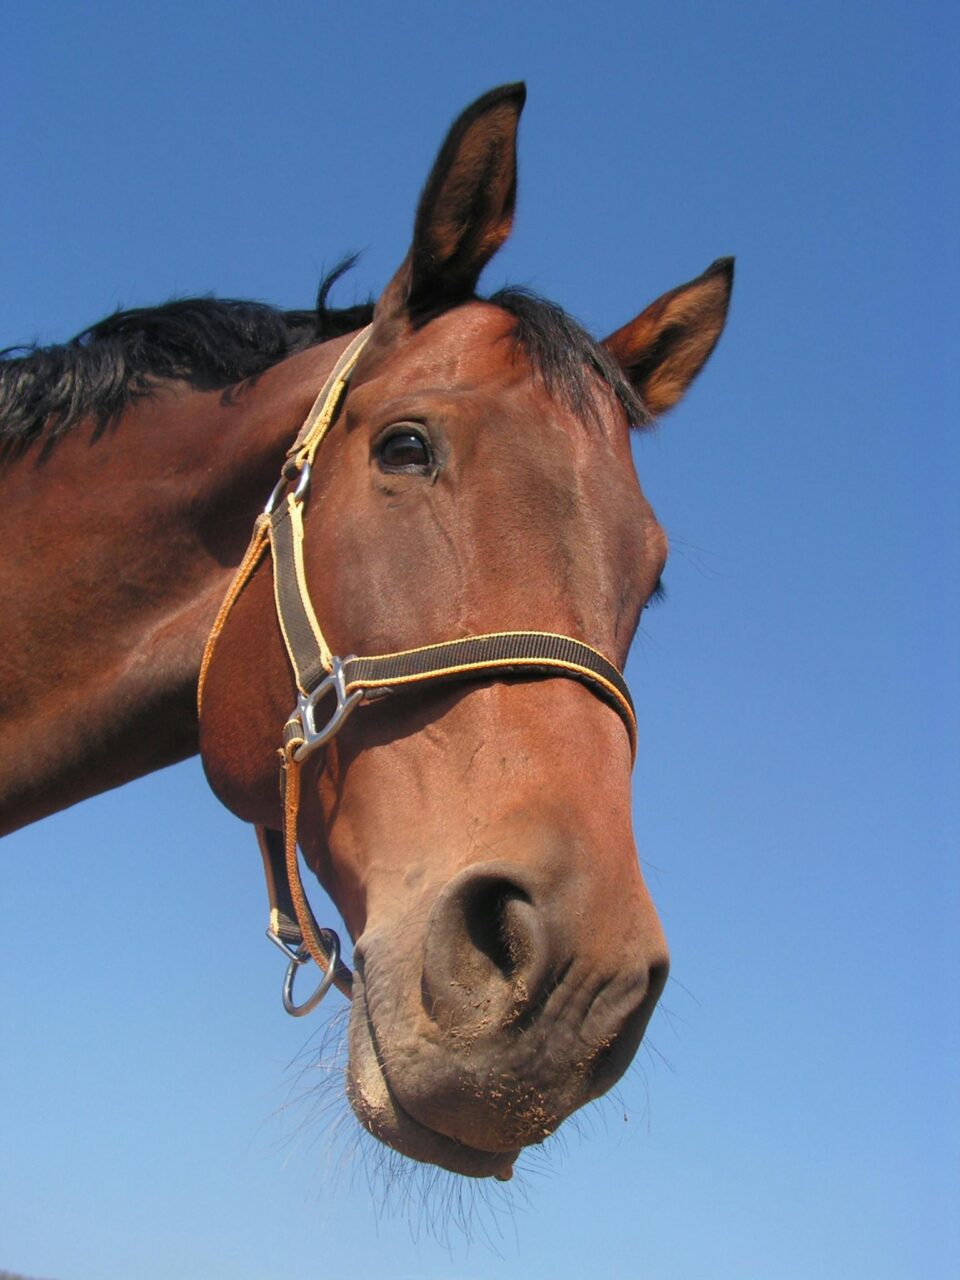 Miami-Dade: Robaron y descuartizaron caballos, servían de terapia para niños